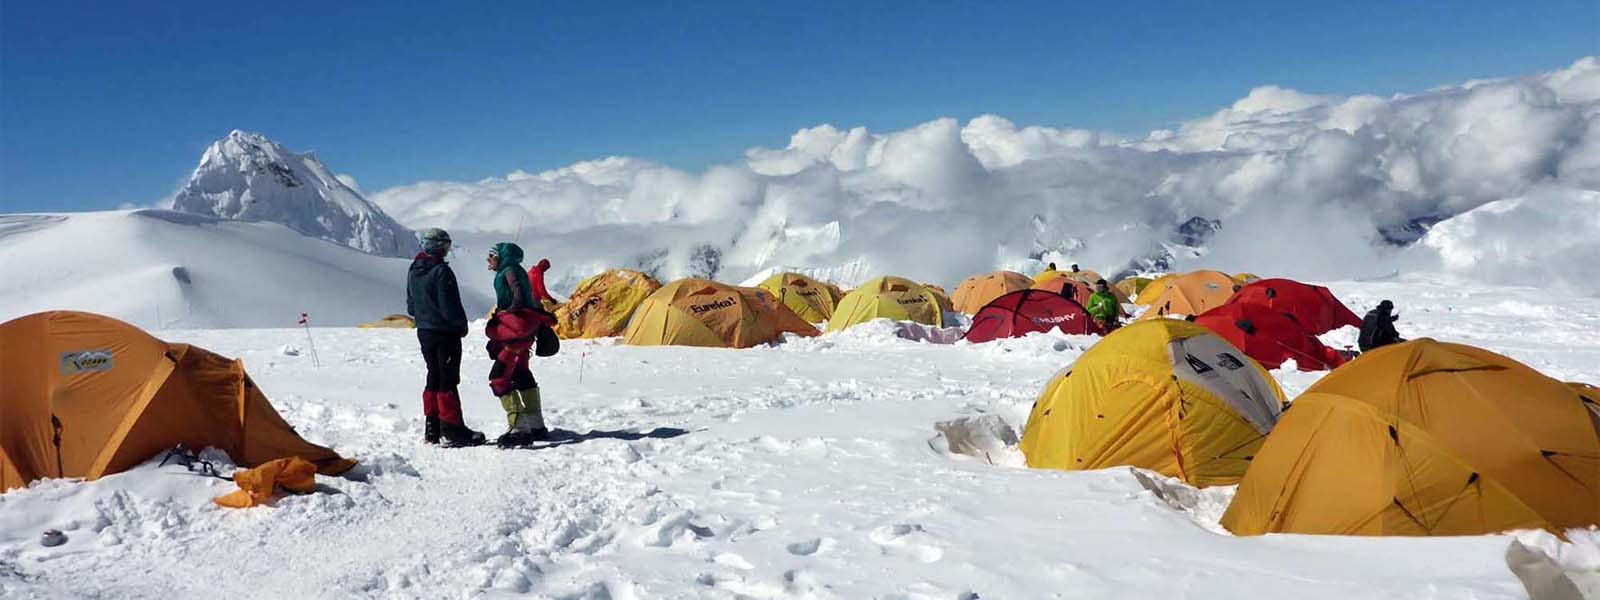 Cho Oyu Expedition - Nepal side